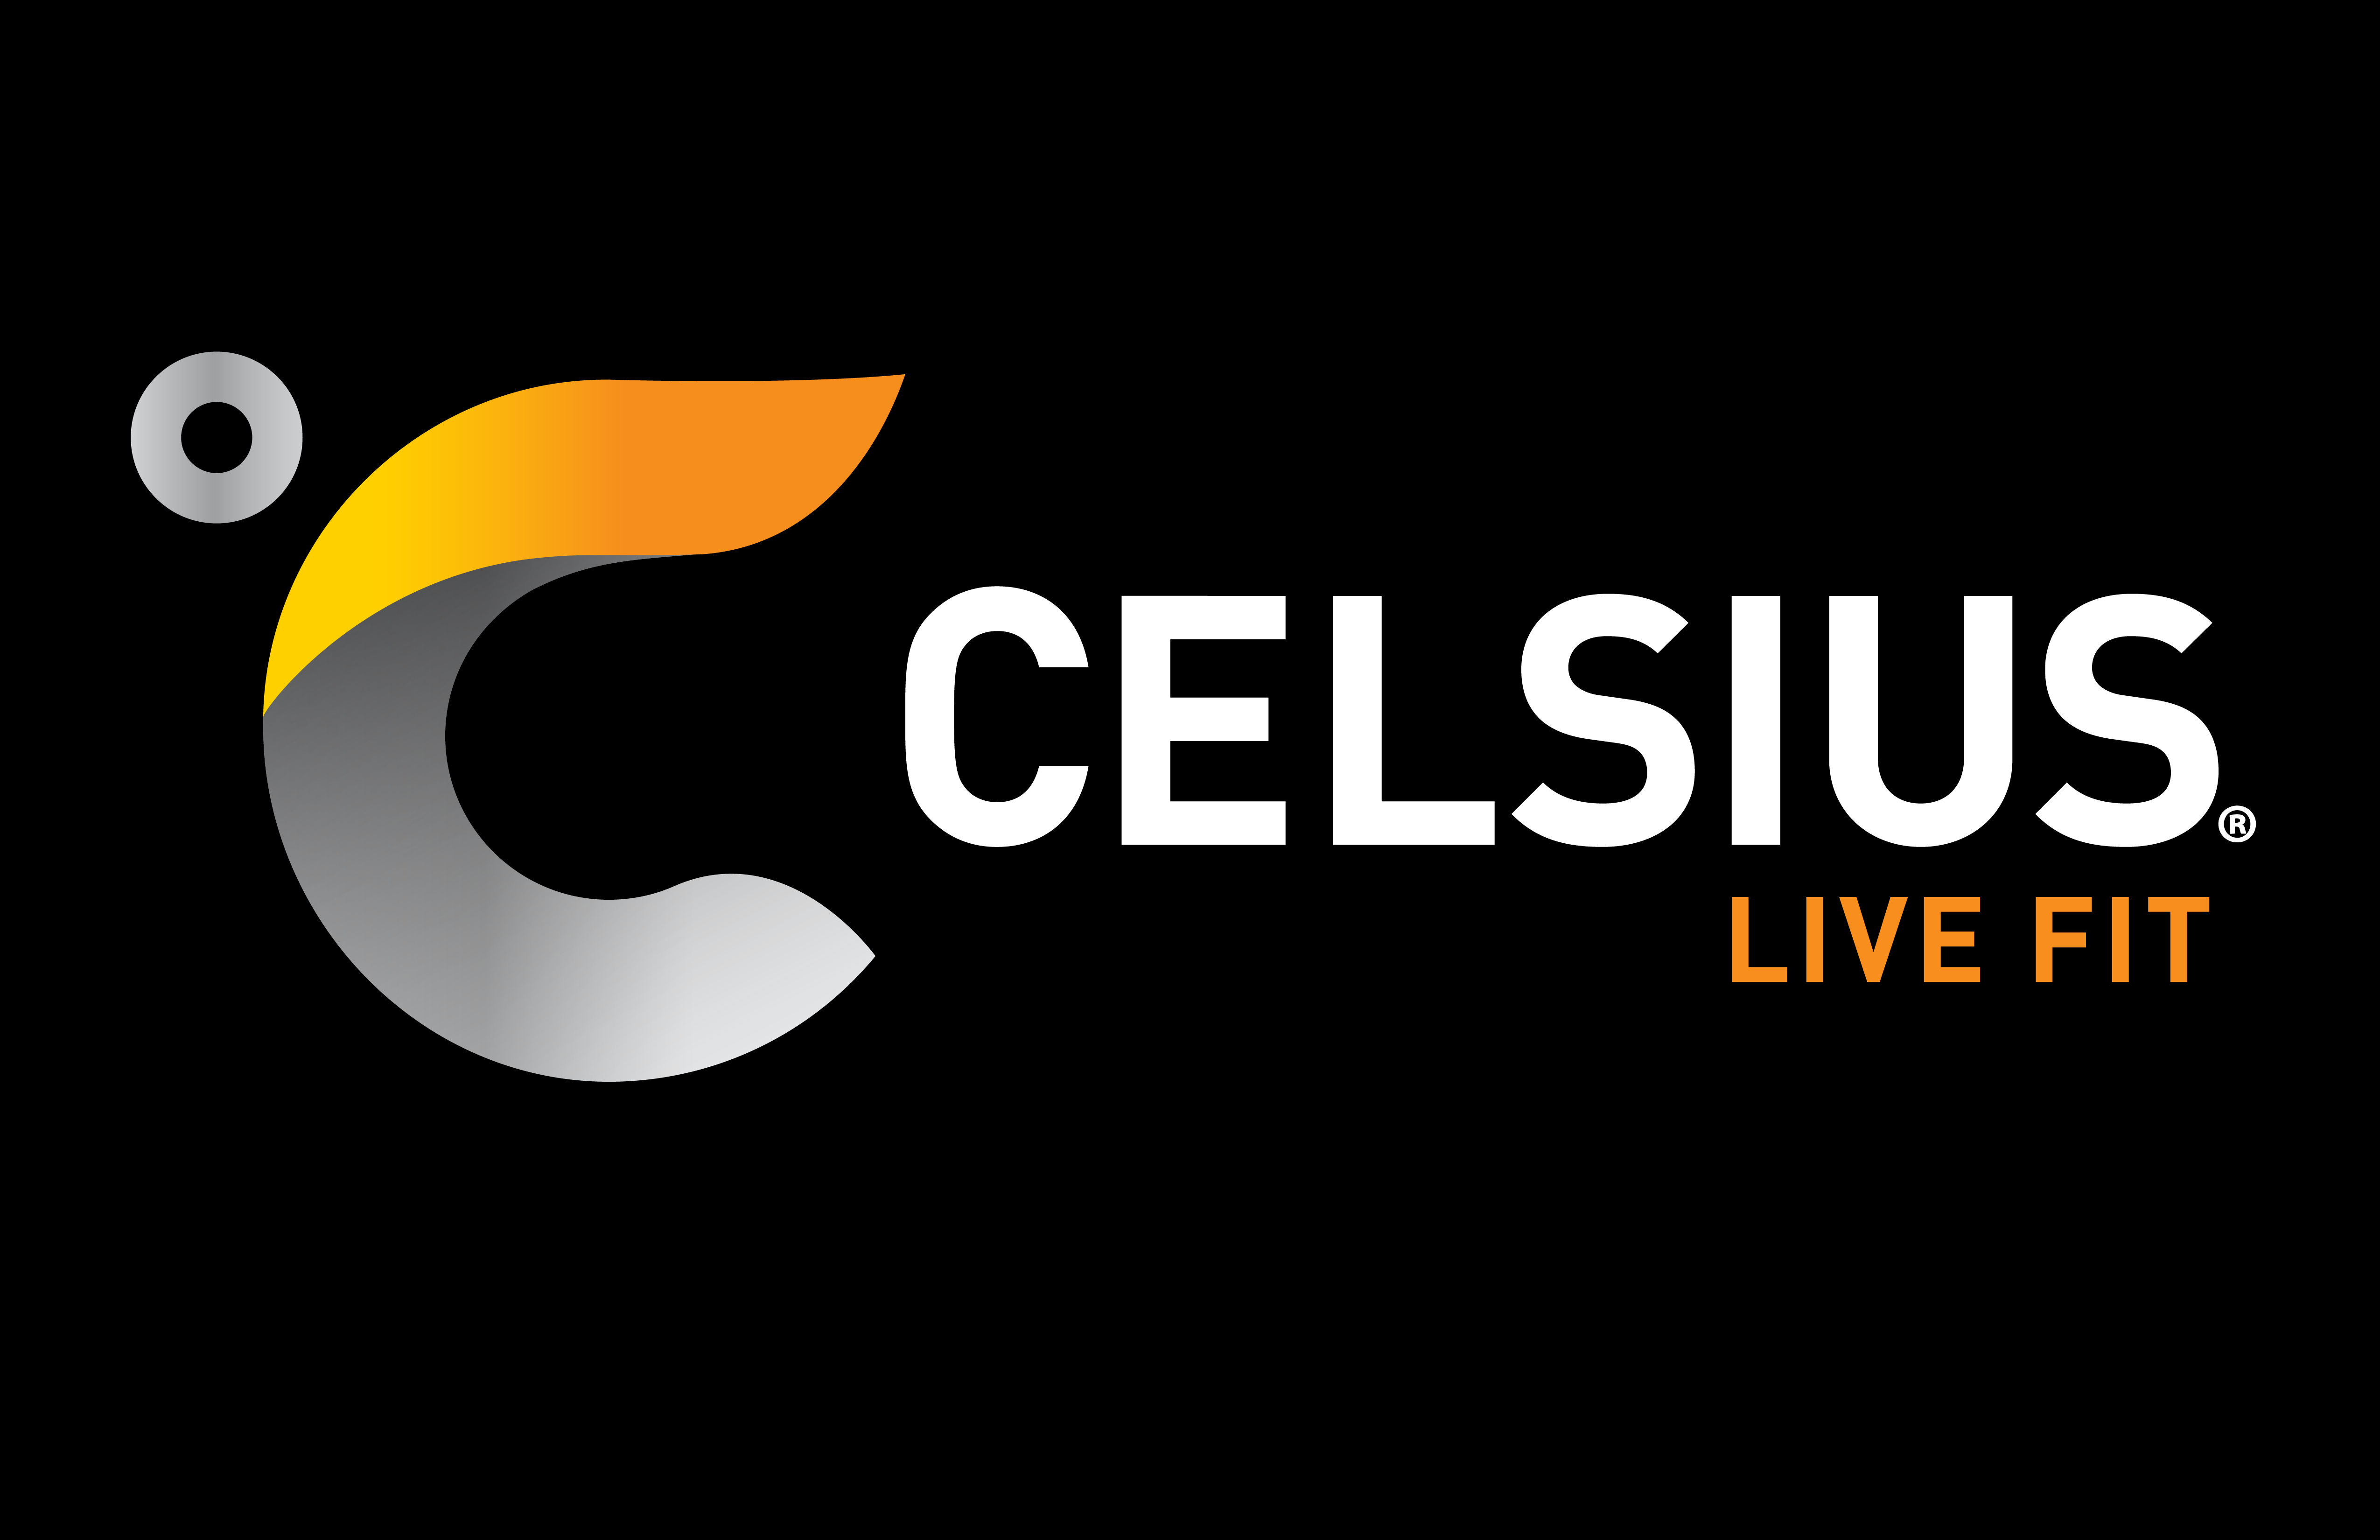 Celsius logo with slogan Live Fit